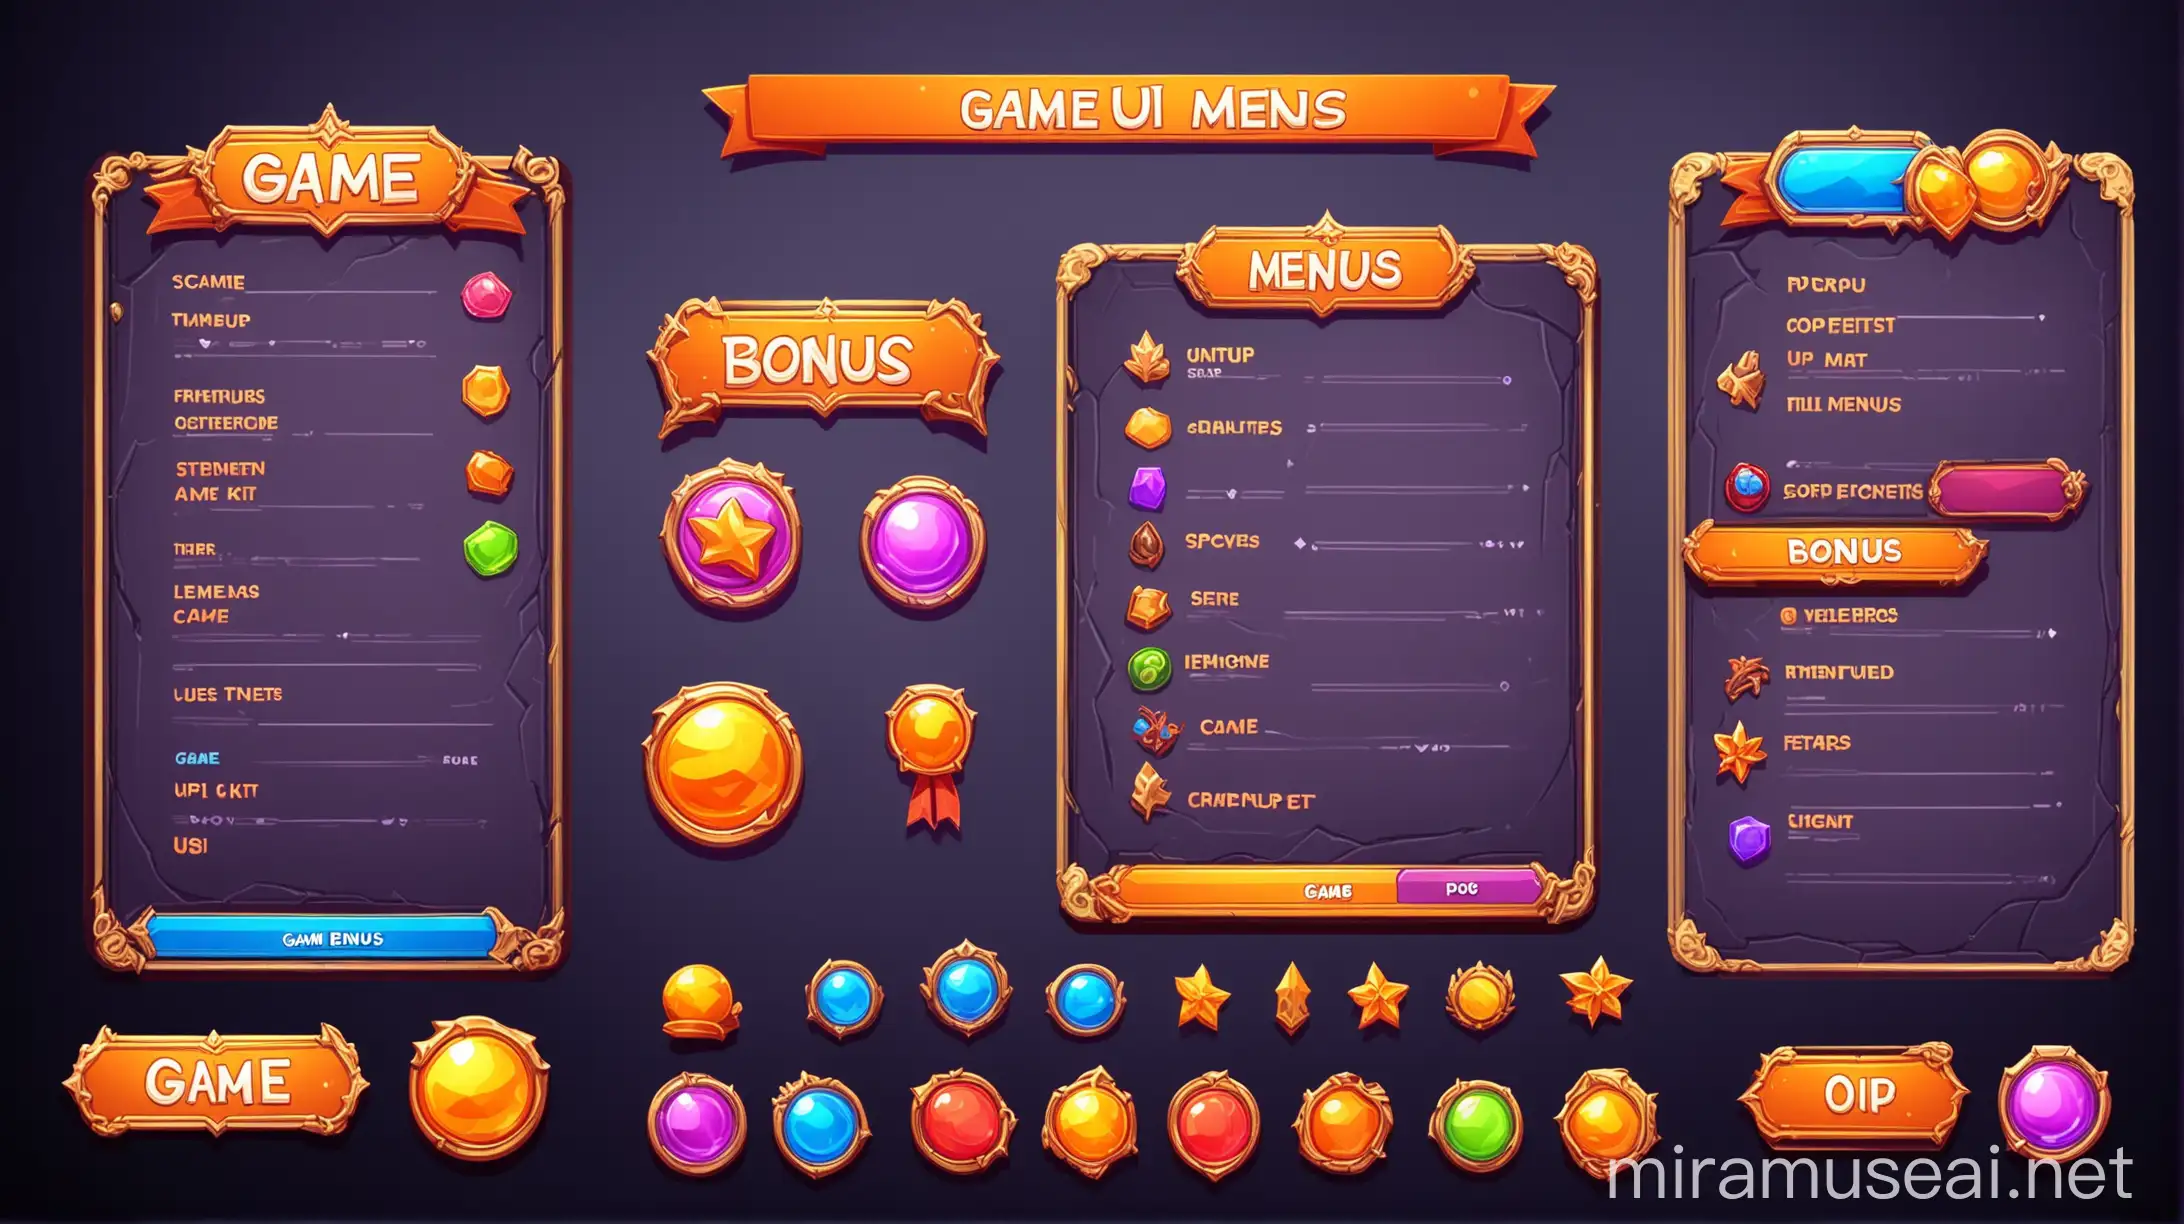 Game ui kit menus pop up screens and game elements background bonus